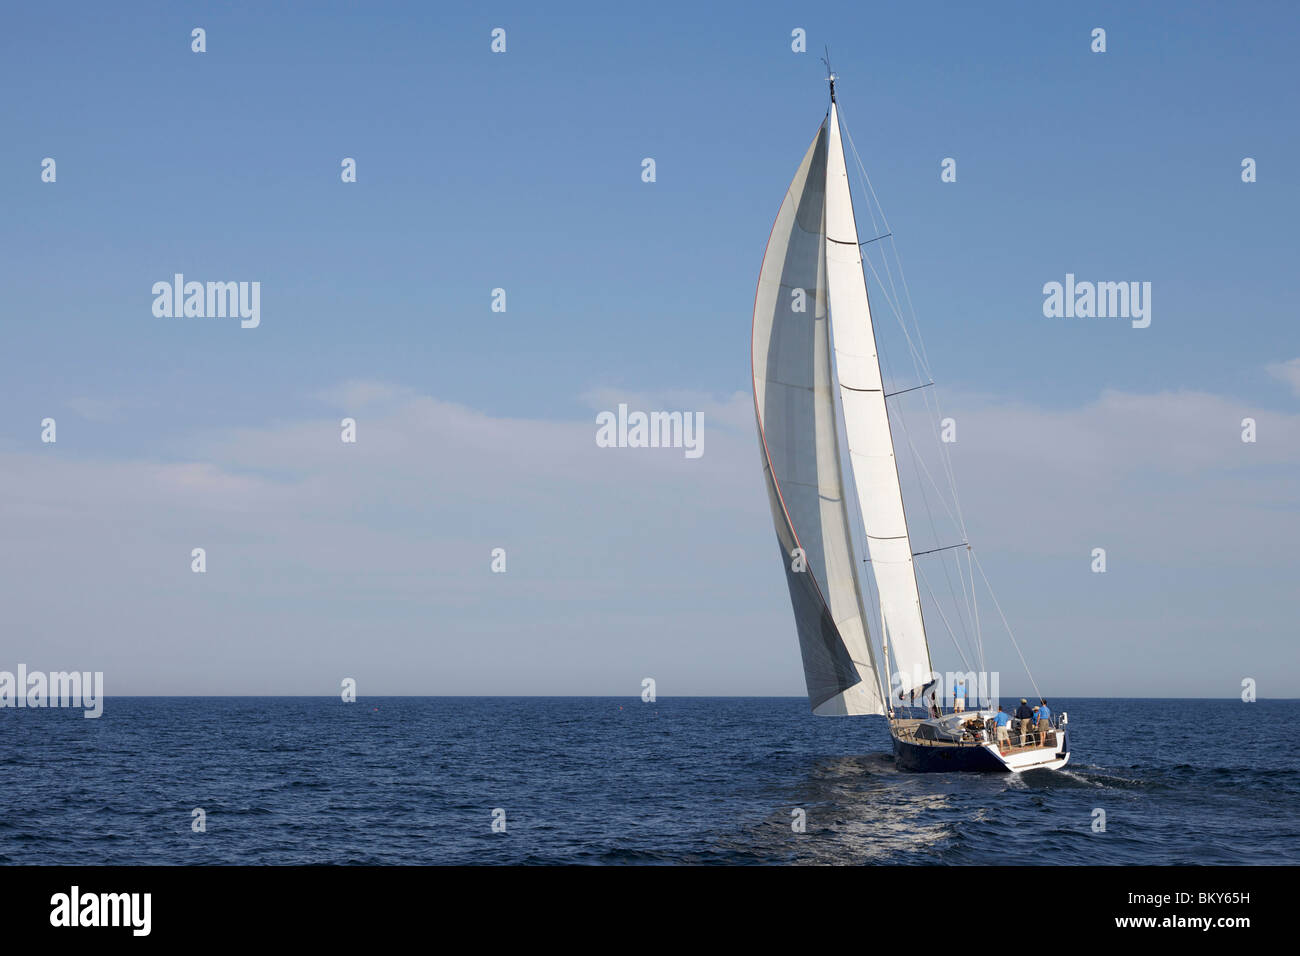 A crew races a modern ocean-going sailing yacht. Stock Photo